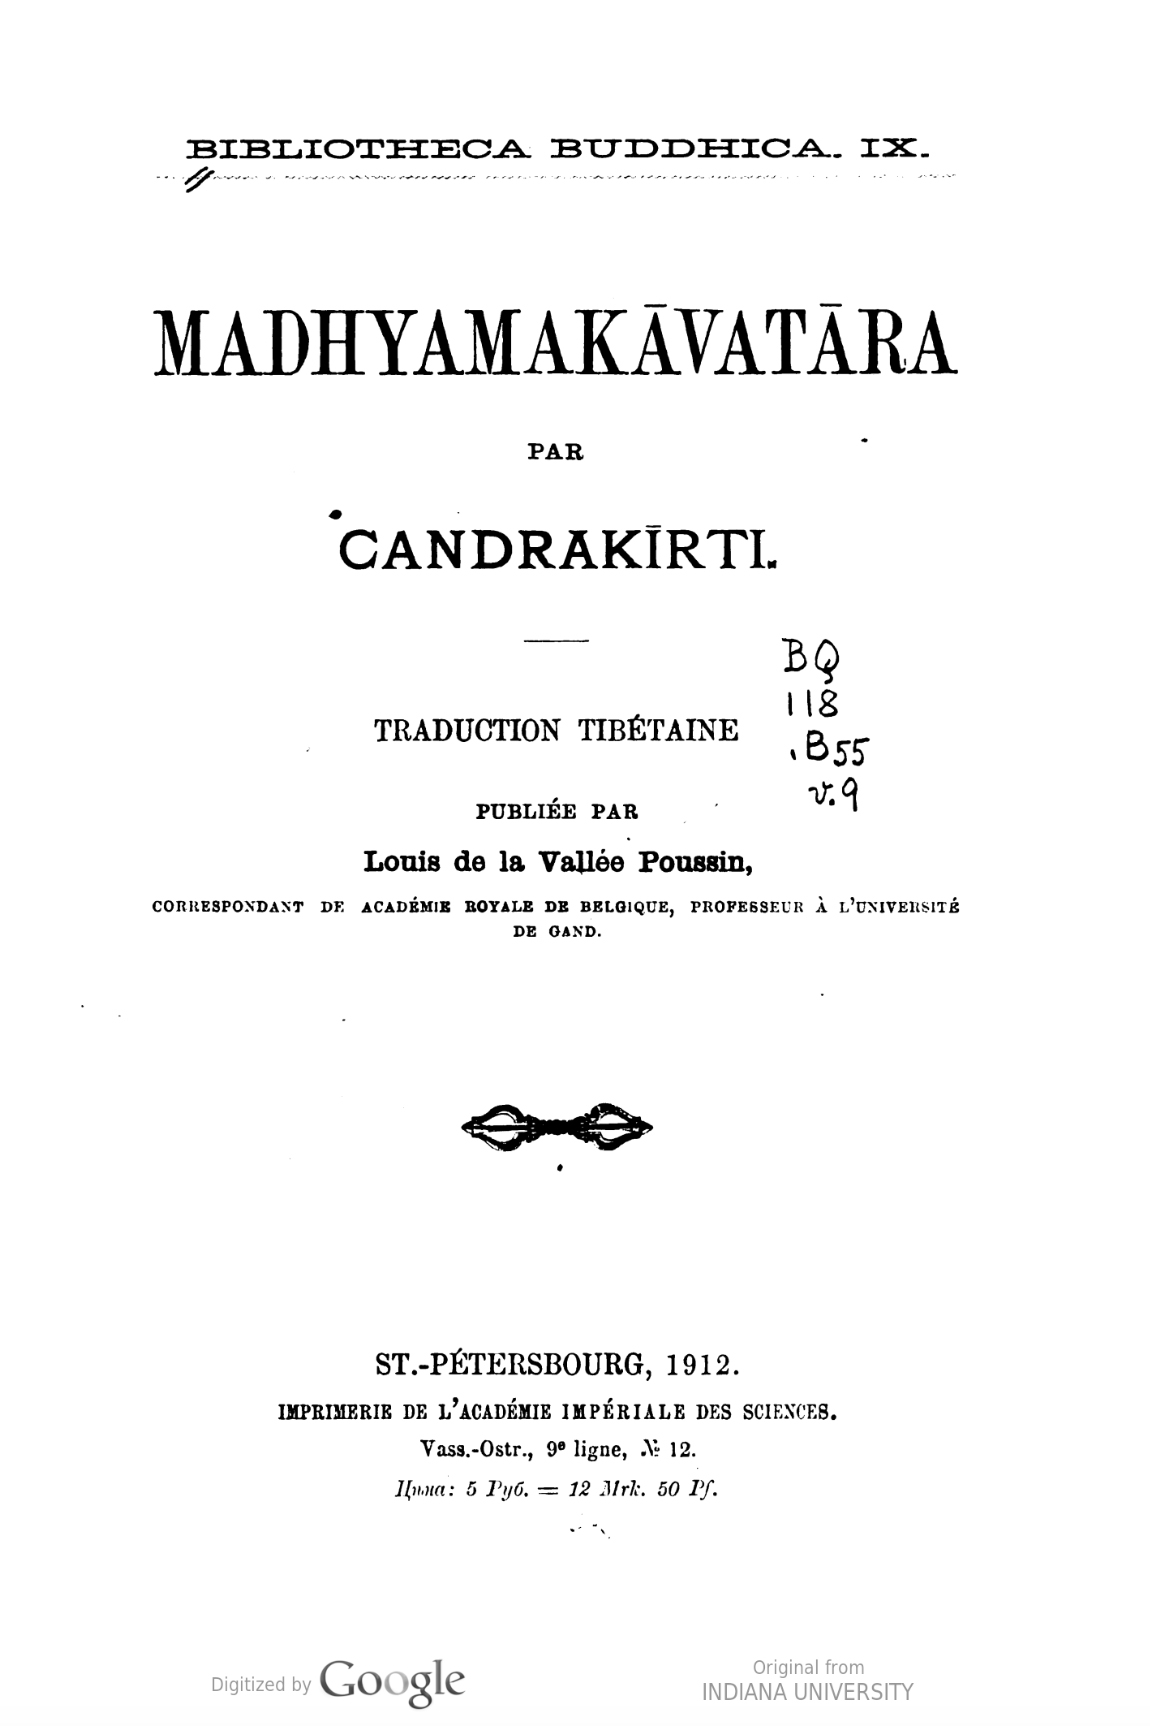 Madhyamakavatara par Candrakirti-front.jpg